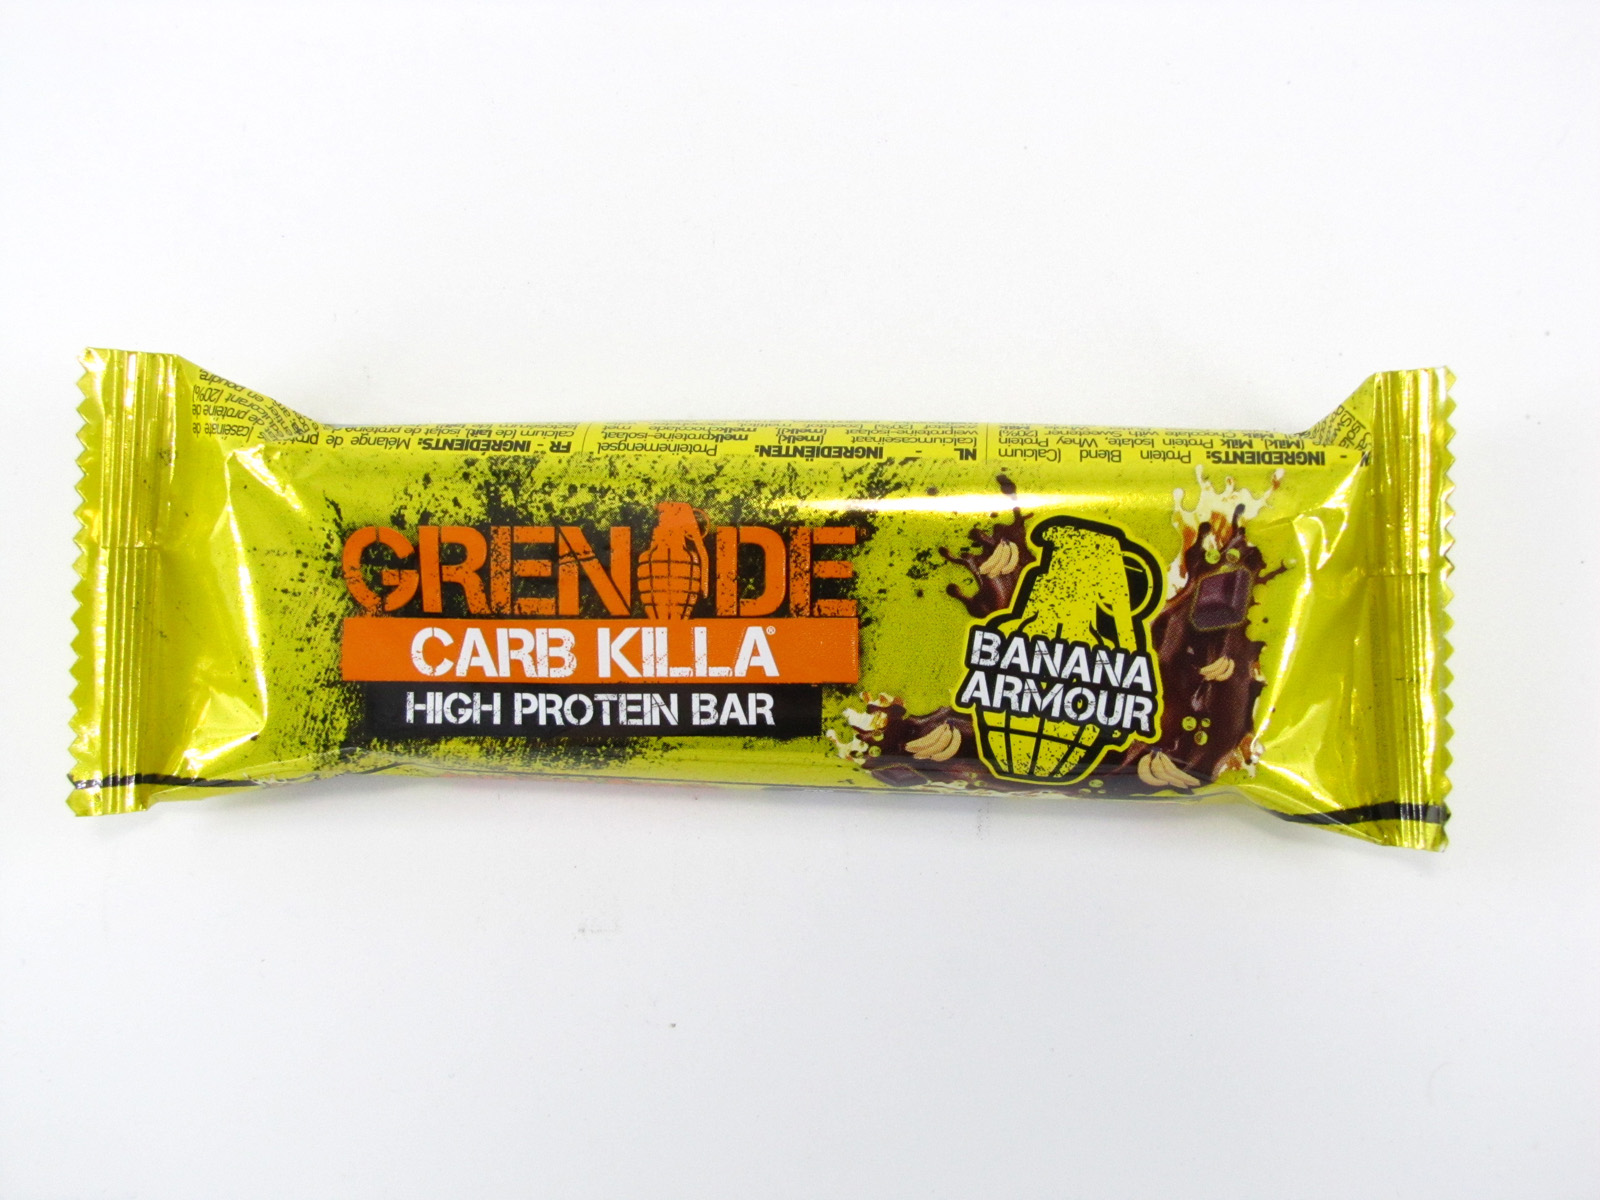 Grenade Carb Killa Protein Bar - Banana Armour - front view